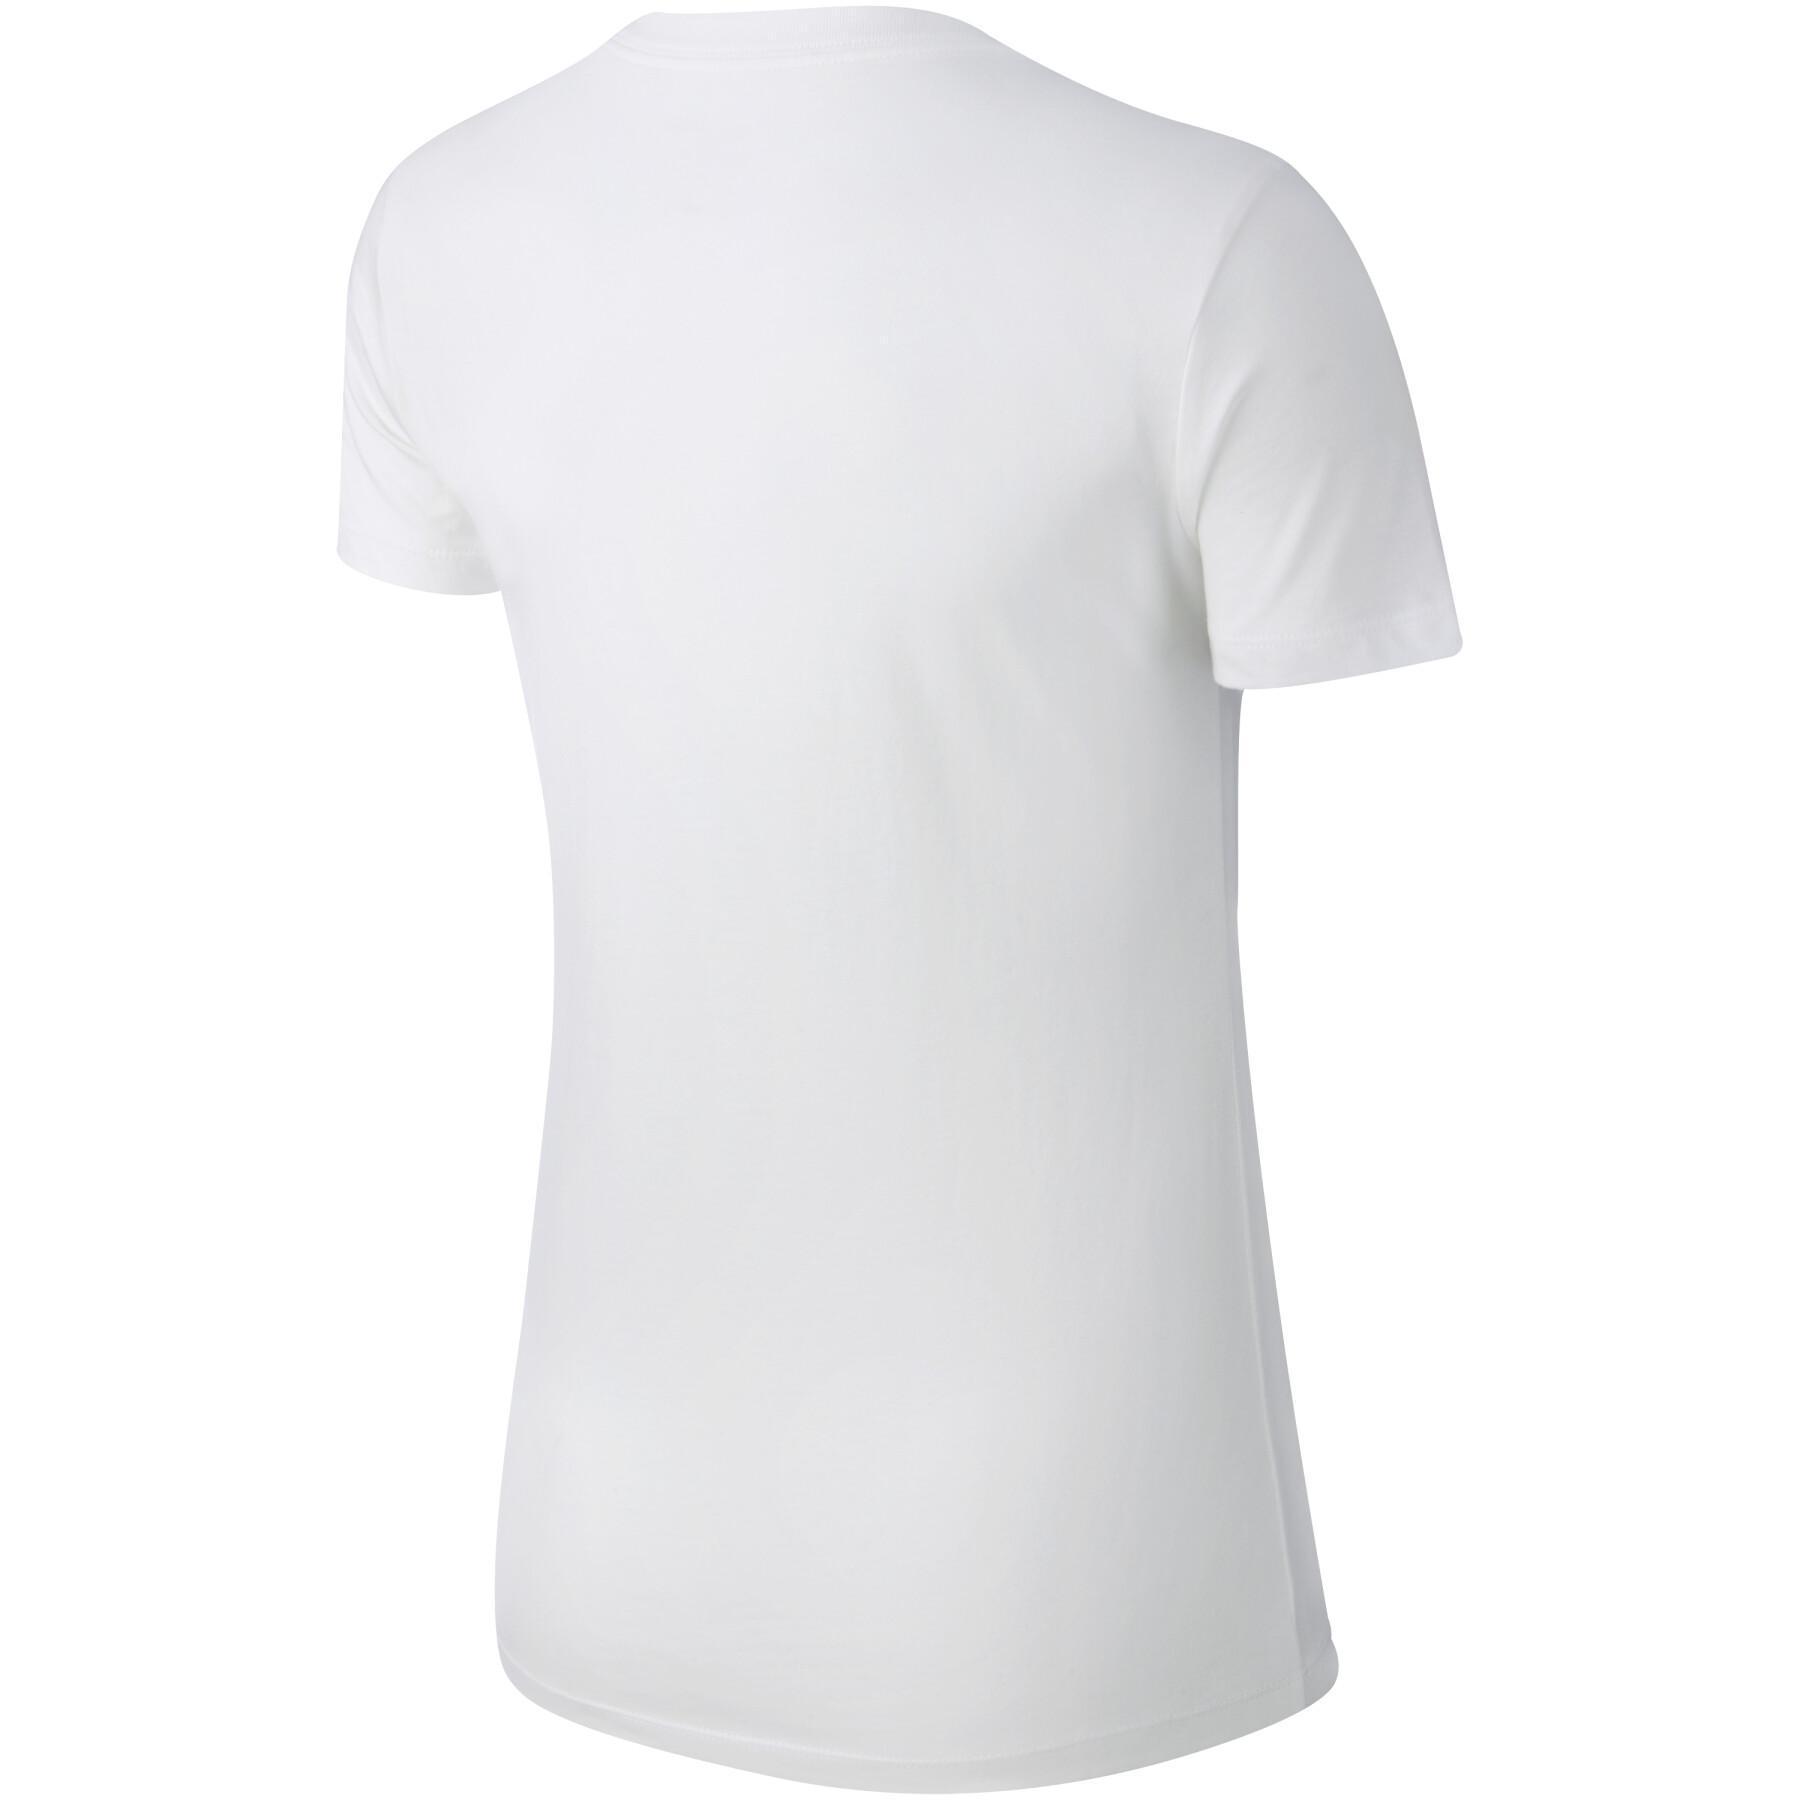 Camiseta feminina Nike sportswear essential